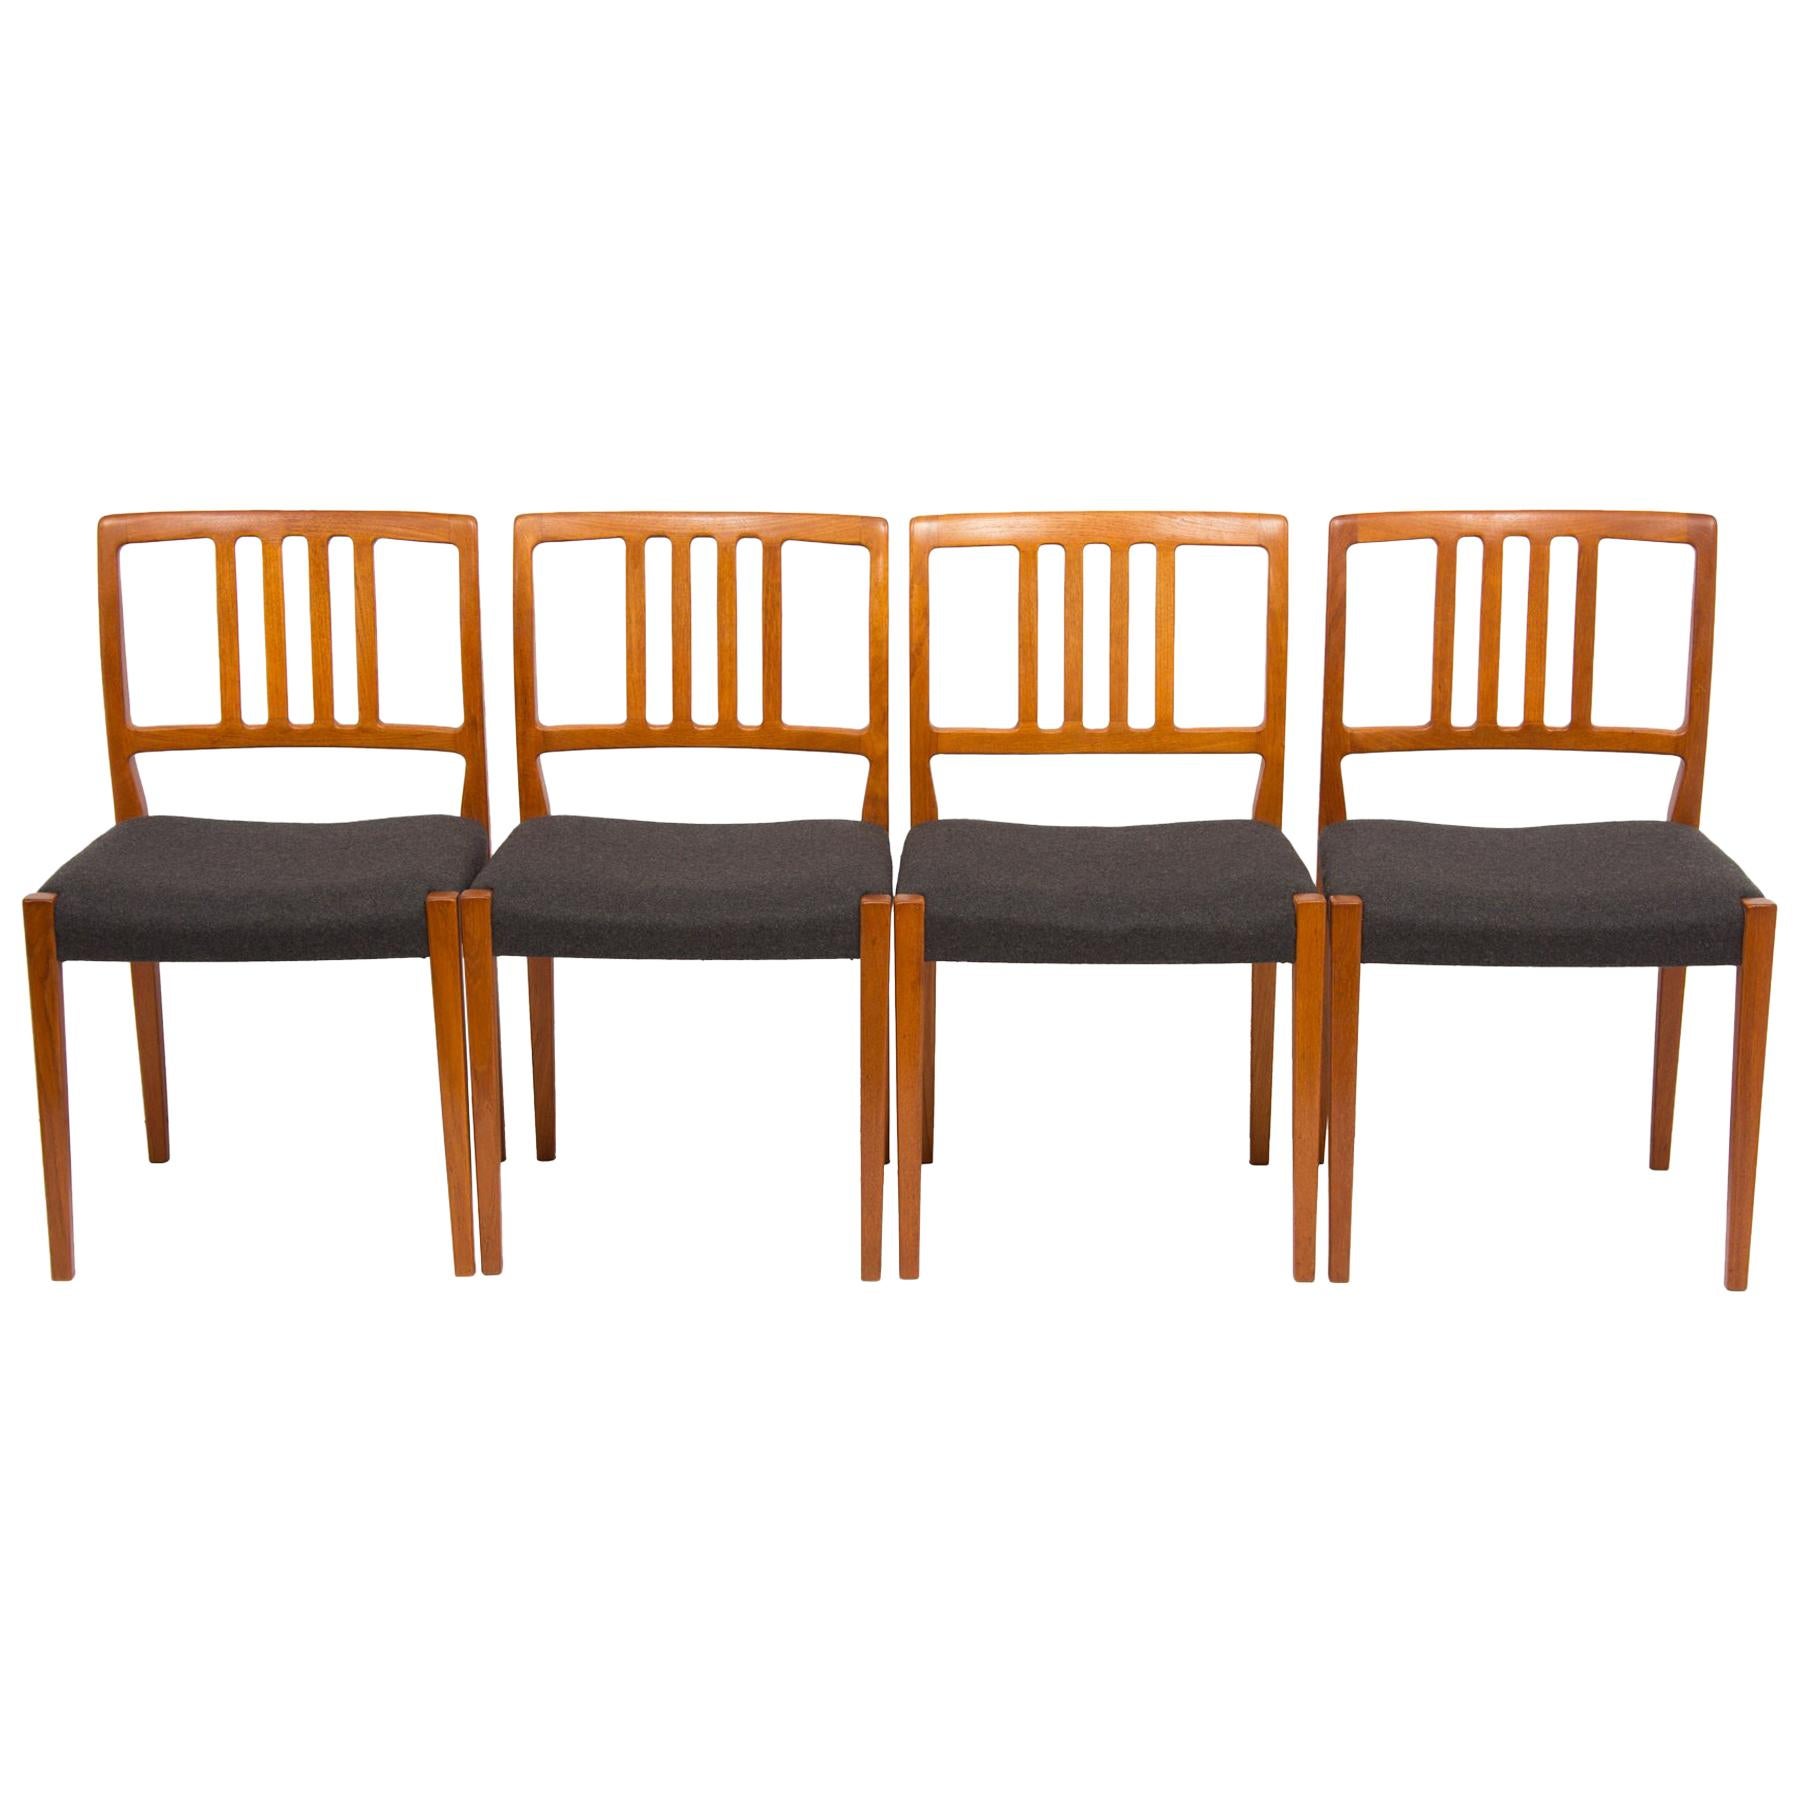 Set of 4 Teak Dining Chairs by Hugo Troeds Bjärnum, Swedish, circa 1960s